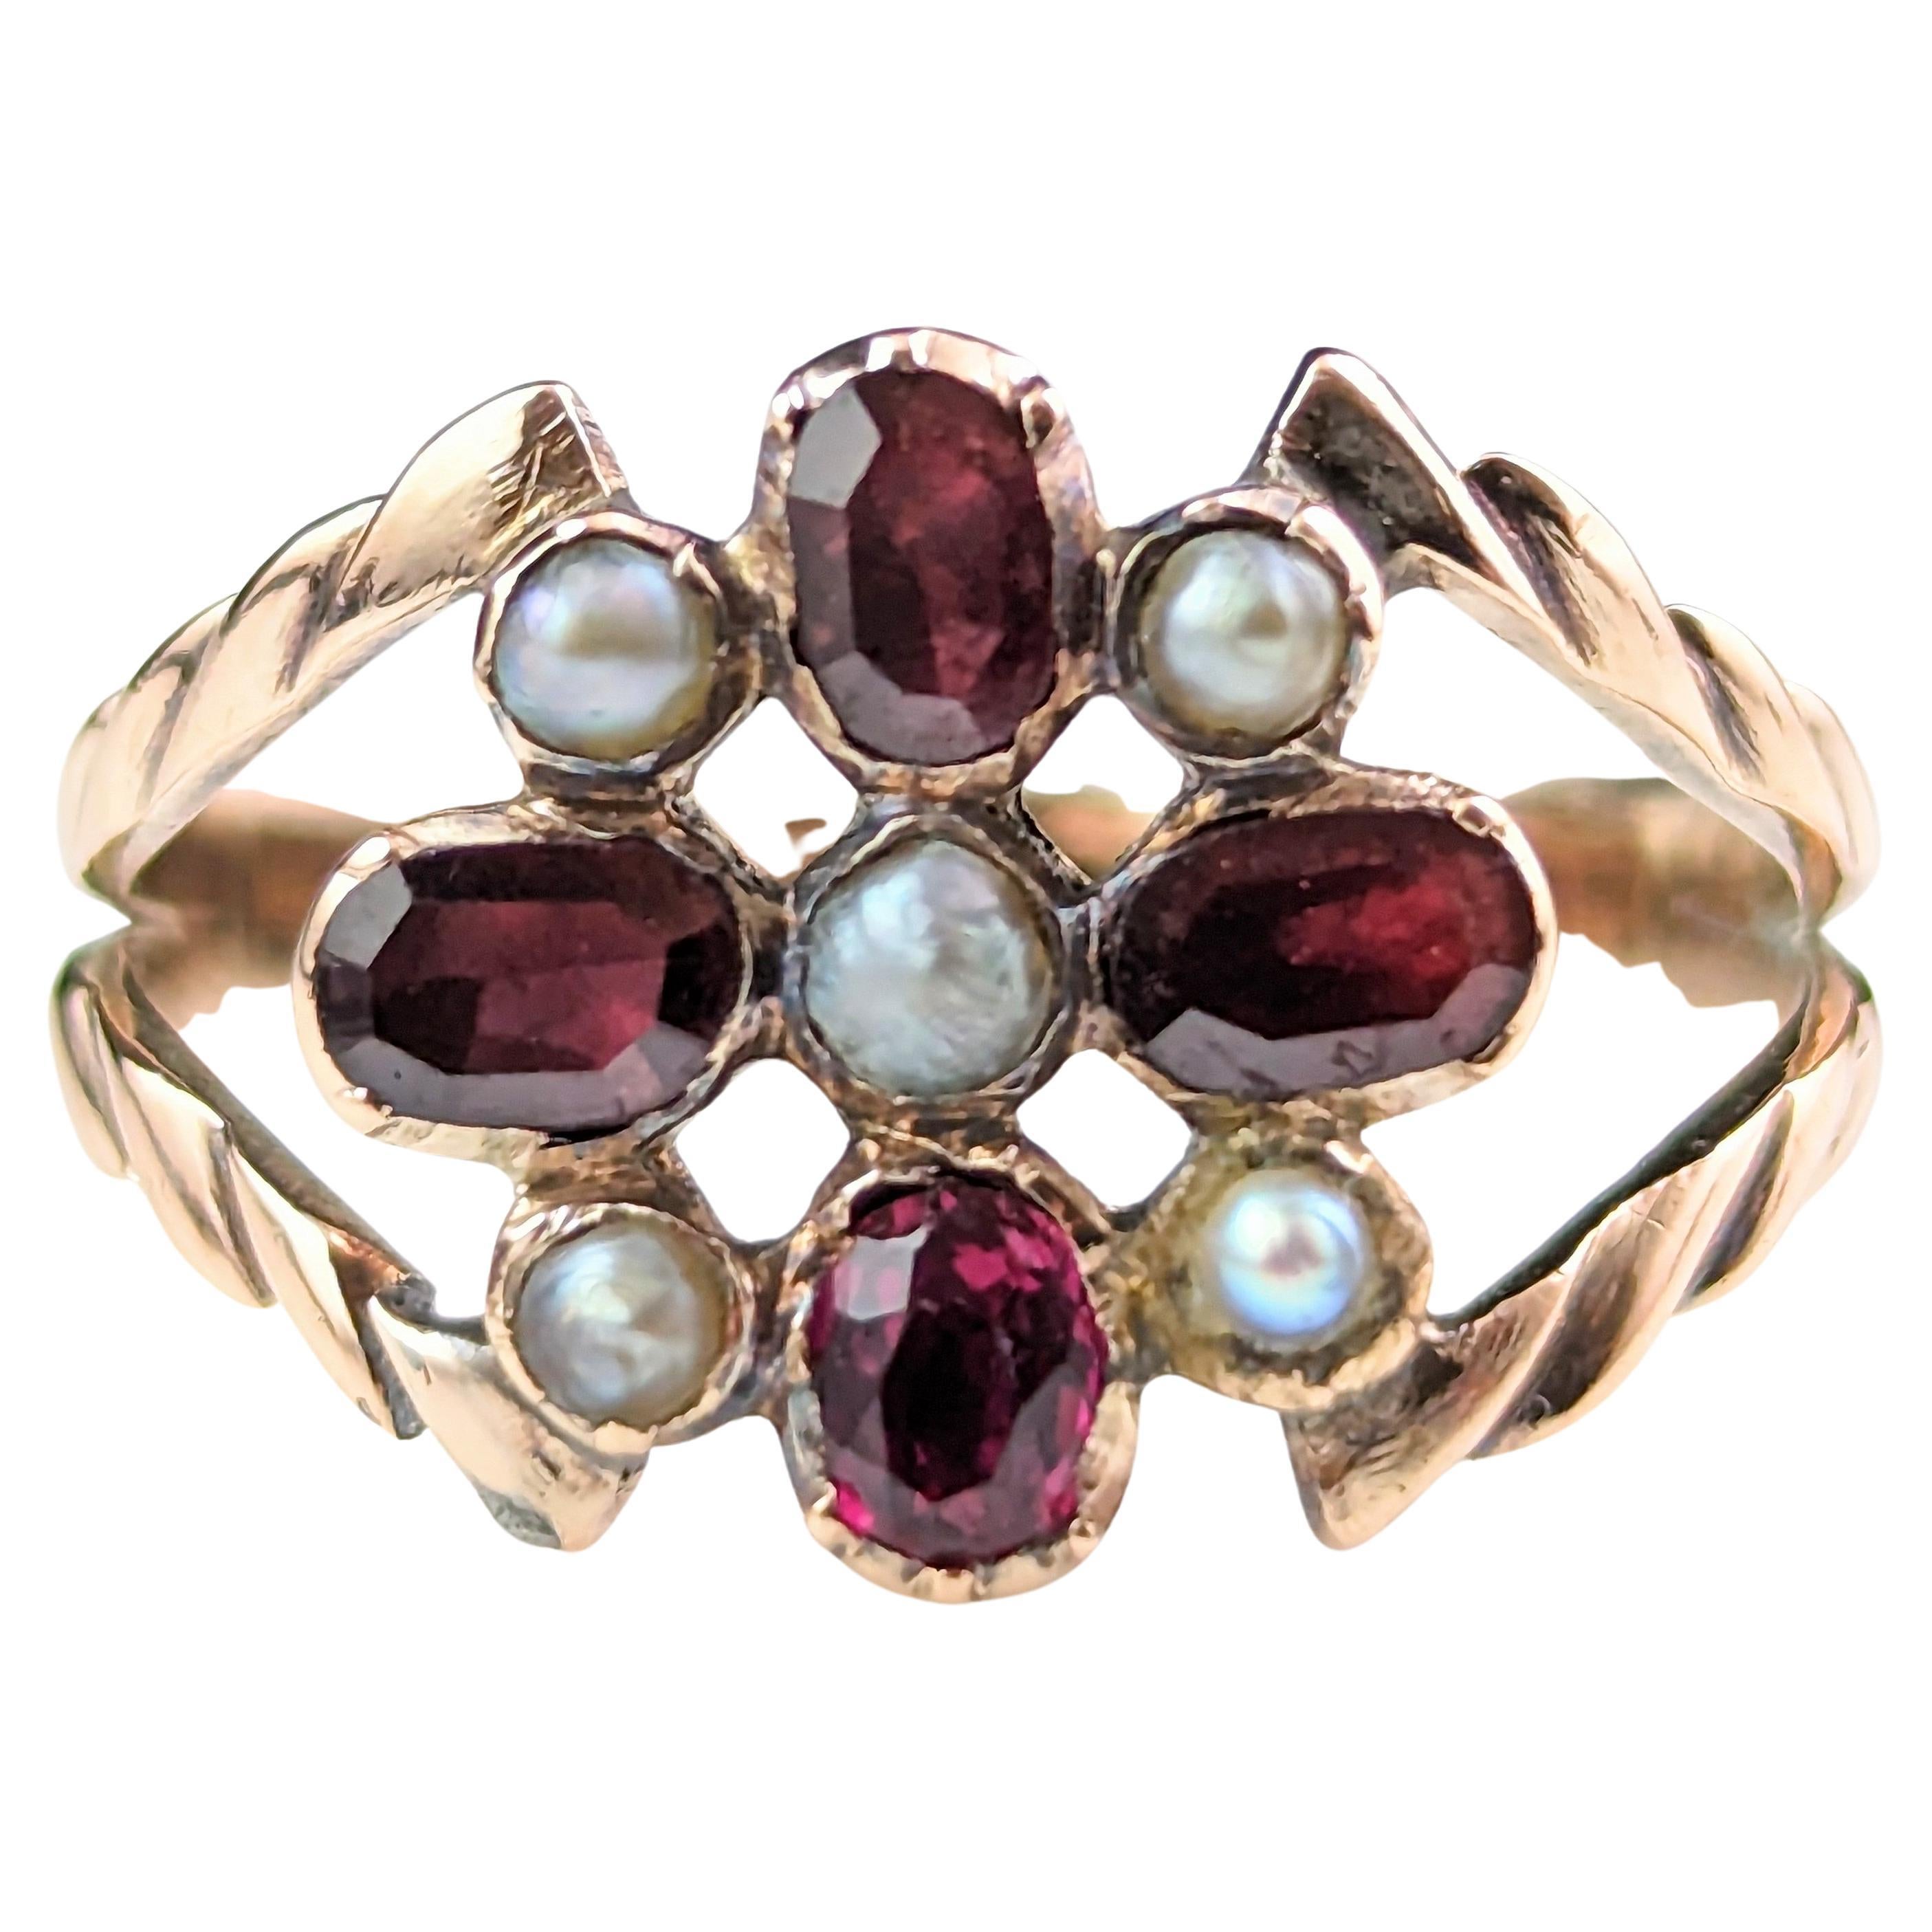 Antique Regency Era Floral Ring, Flat Cut Garnet, Pearl and Ruby, 9k Gold